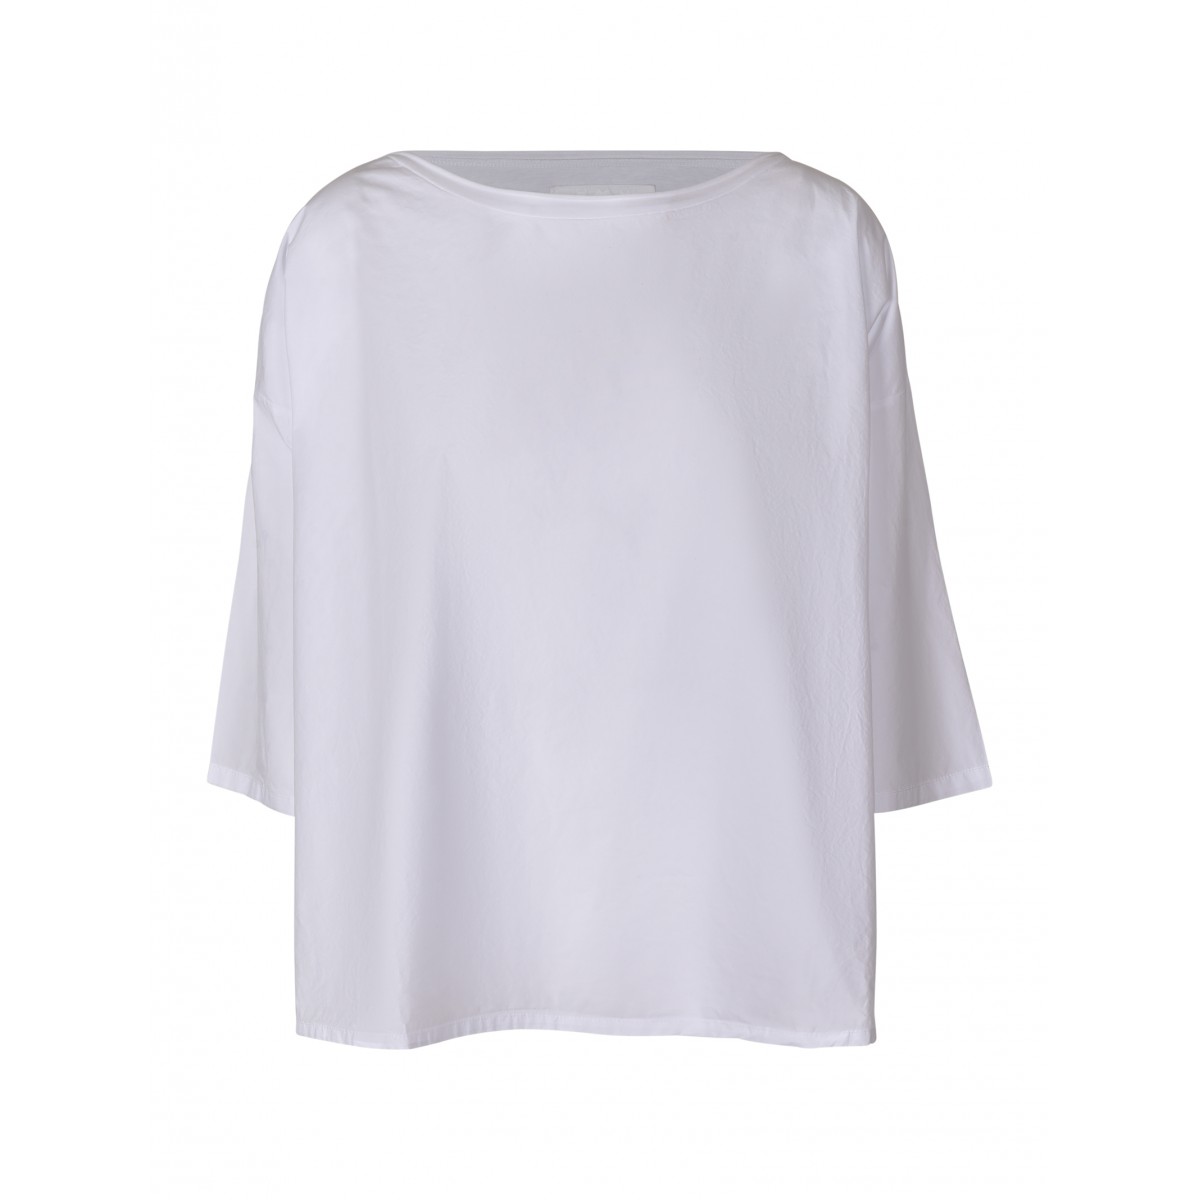 T-shirt Luce clara white